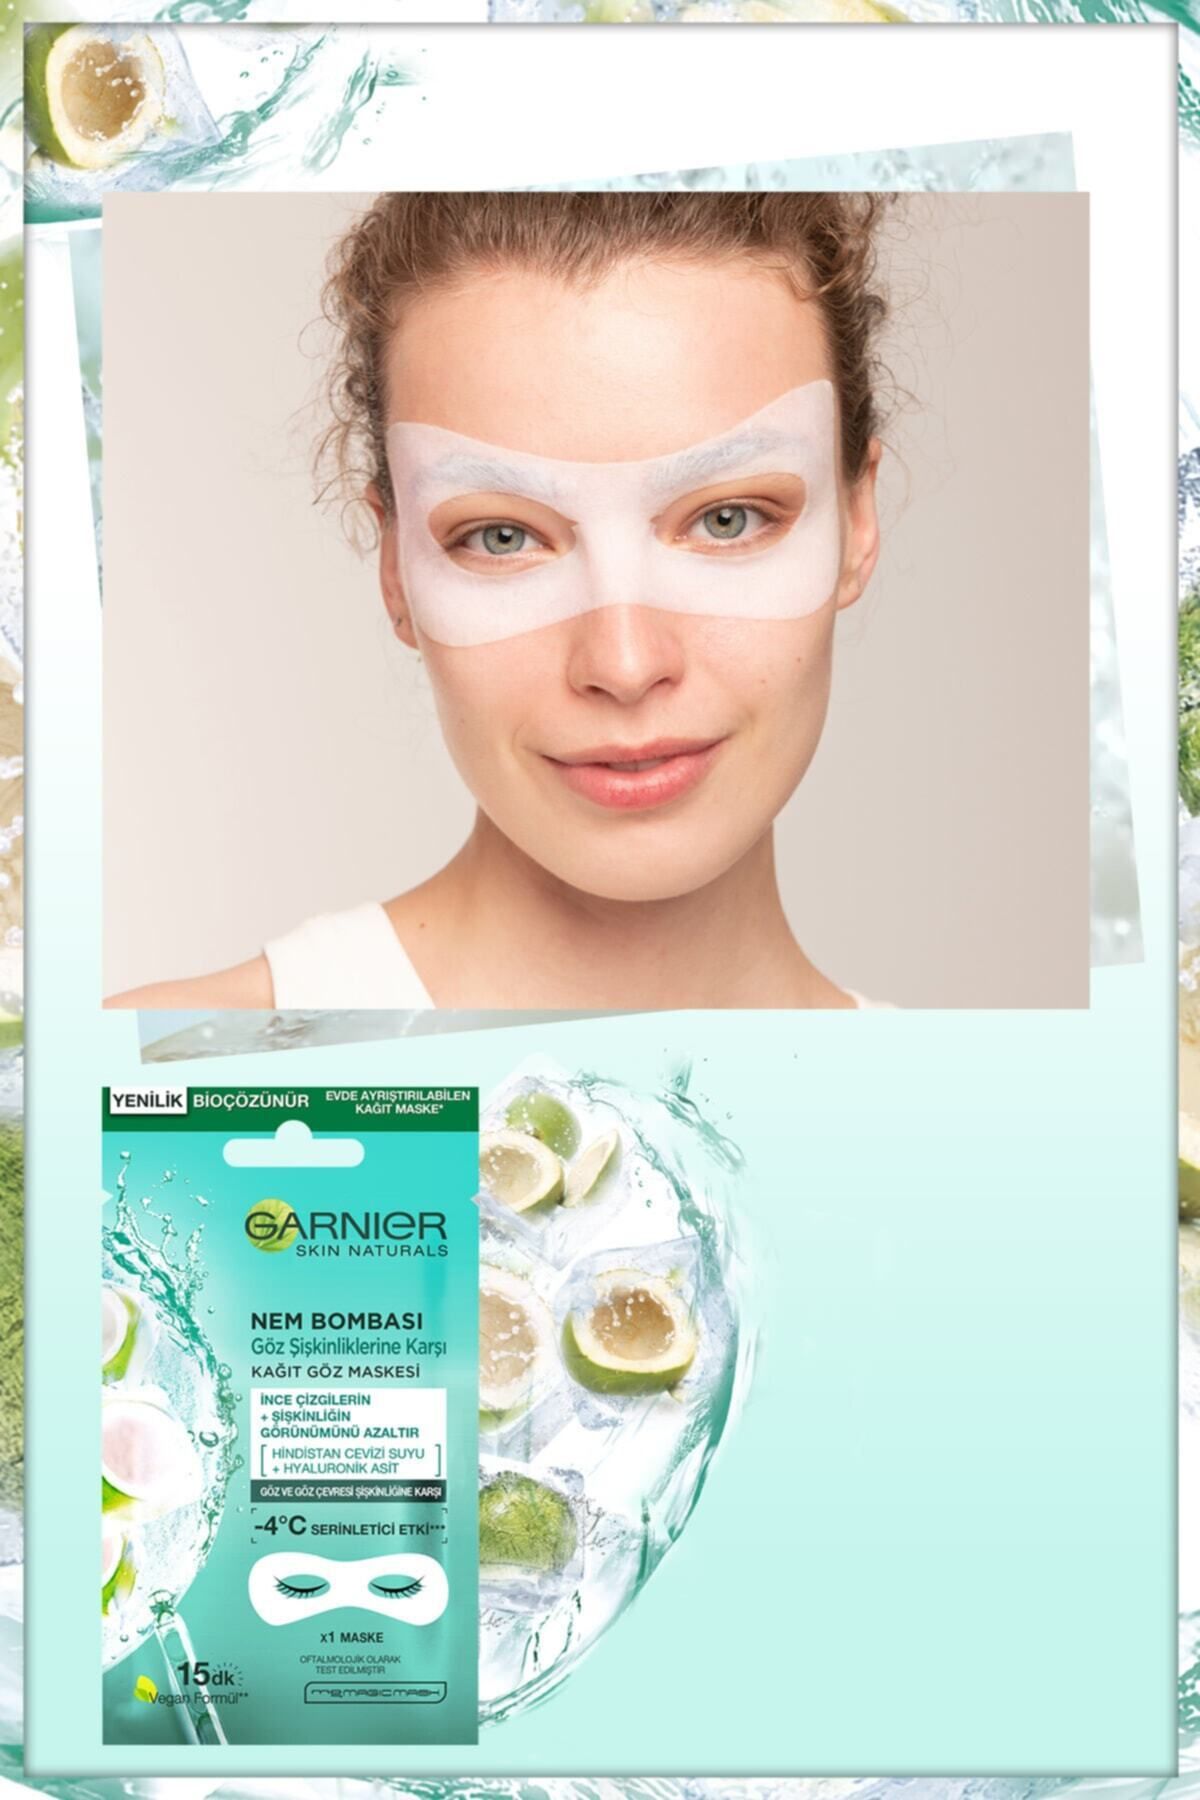 Garnier ماسک چشم کاغذی ضد بلوغ چشم با افزایش مرطوبت